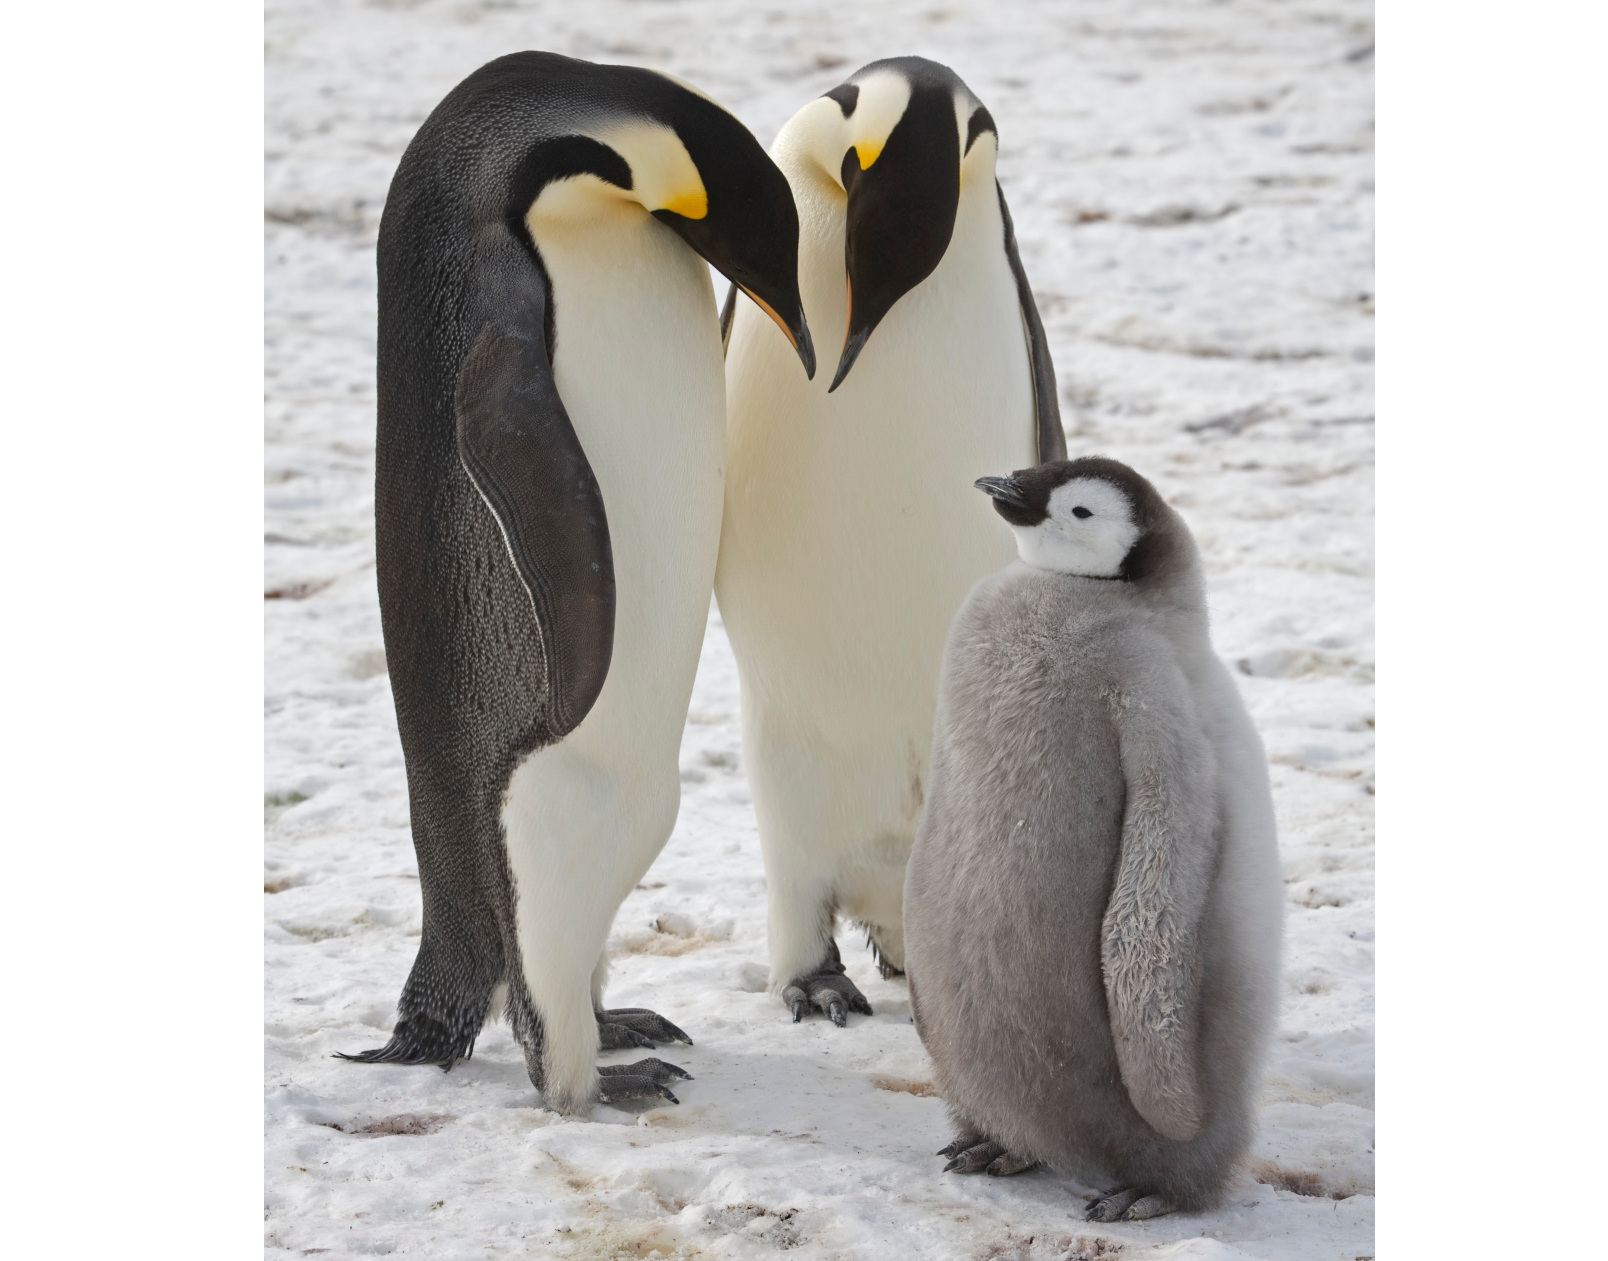 https://www.wissenschaft.de/wp-content/uploads/1/0/10009802-Adult-emperor-penguins-with-chick-near-Halley-Research-Station.jpg